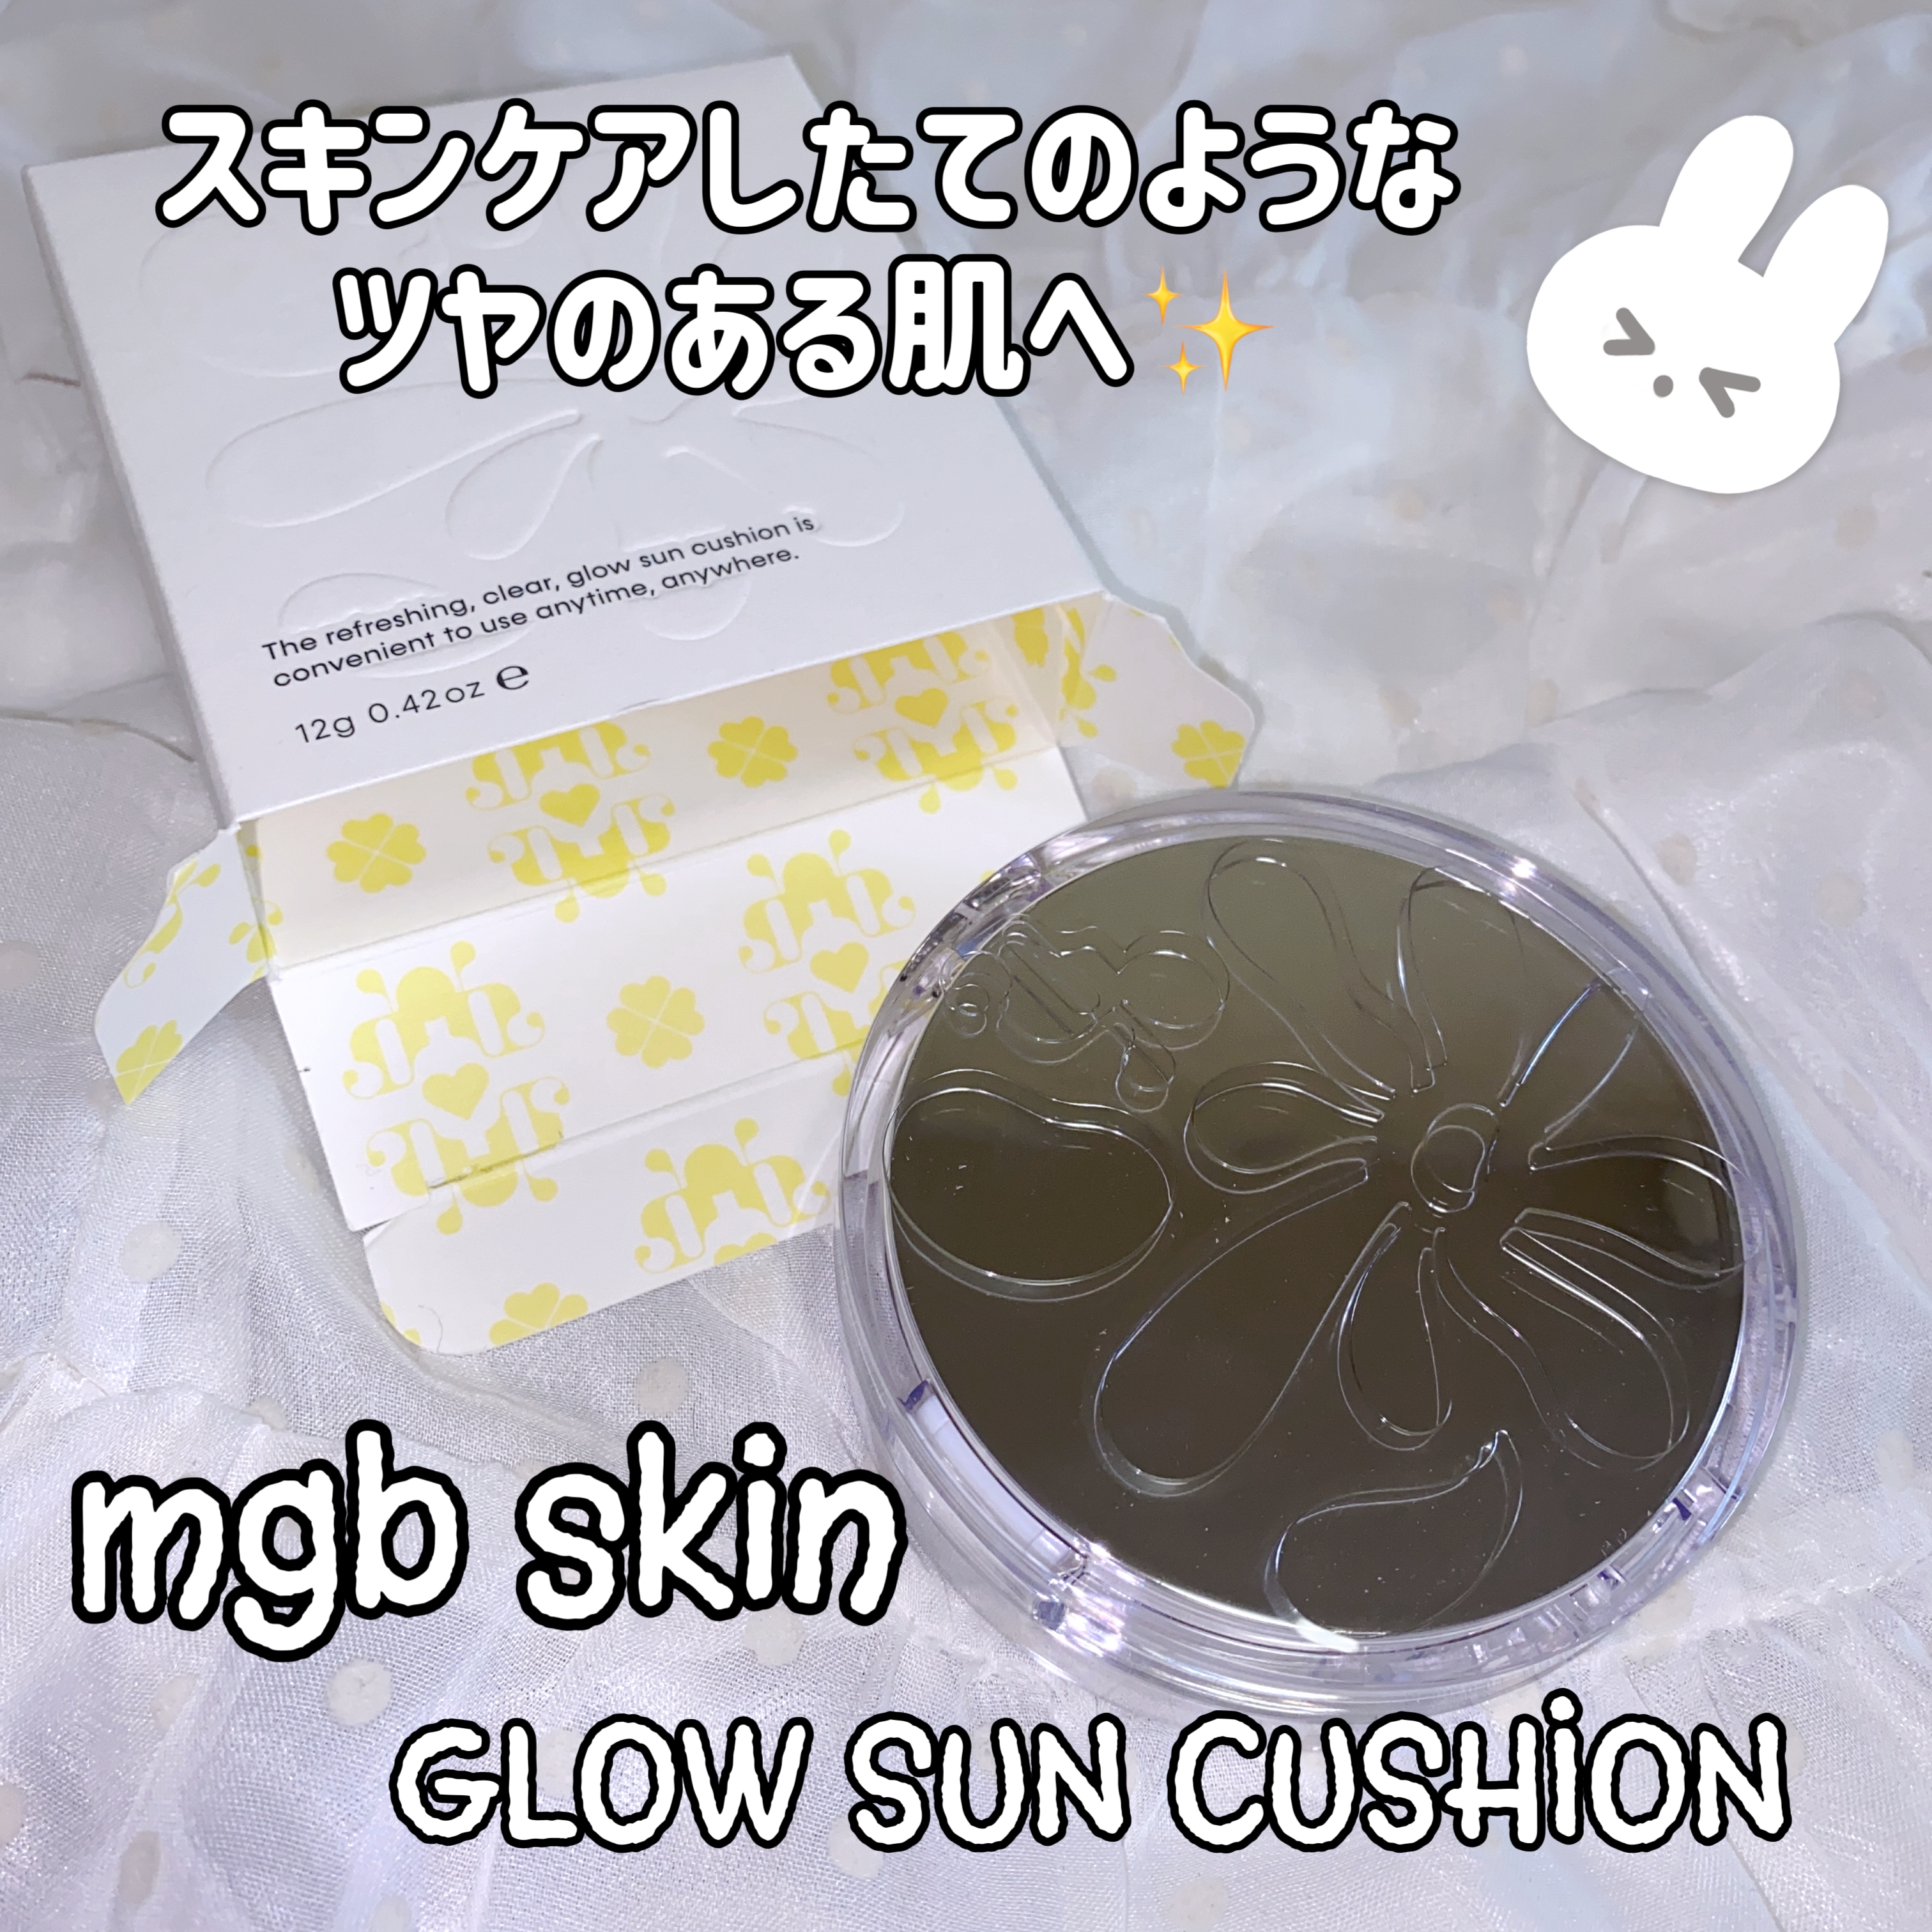 mgb skin
GLOW SUN CUSHIONの良い点・メリットに関する珈琲豆♡さんの口コミ画像1